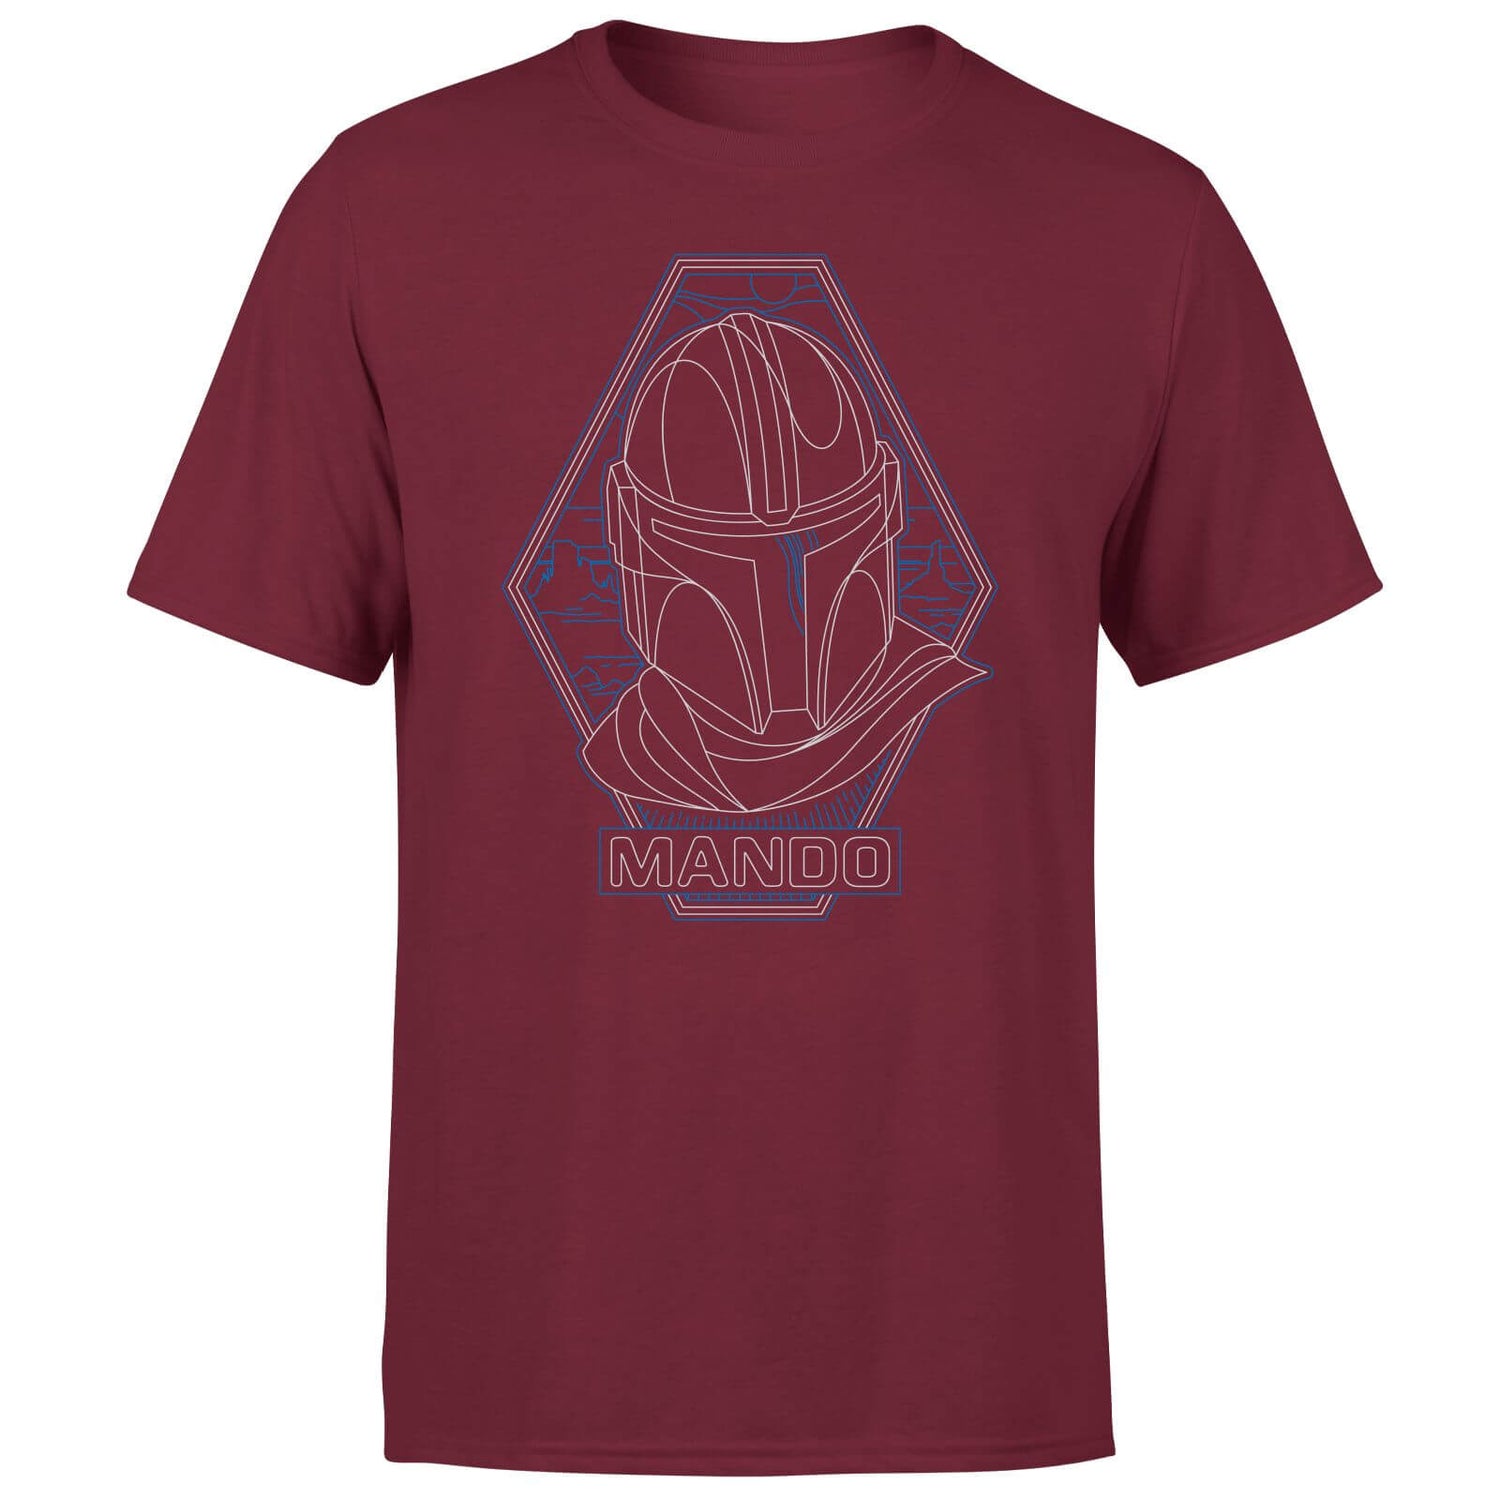 Star Wars The Mandalorian Mando Line Art Badge Men's T-Shirt - Burgundy